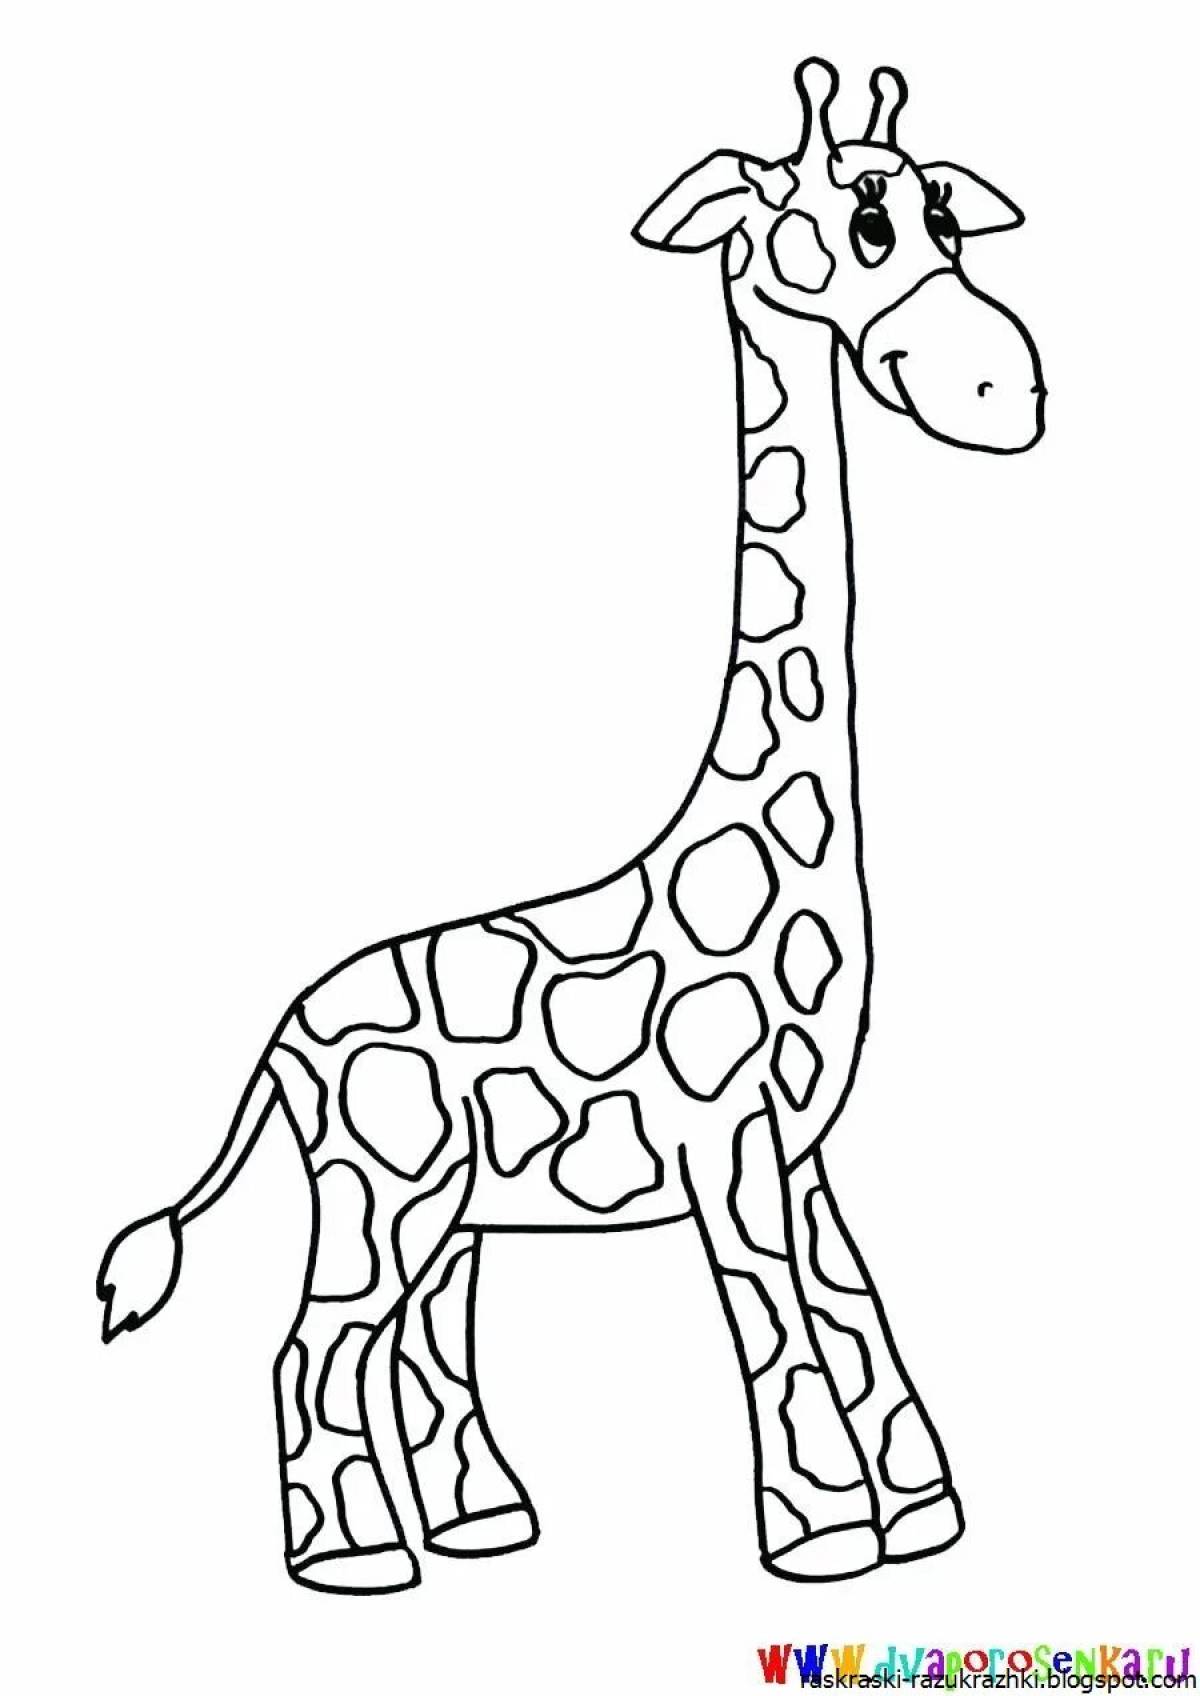 Drawing giraffe for kids #8